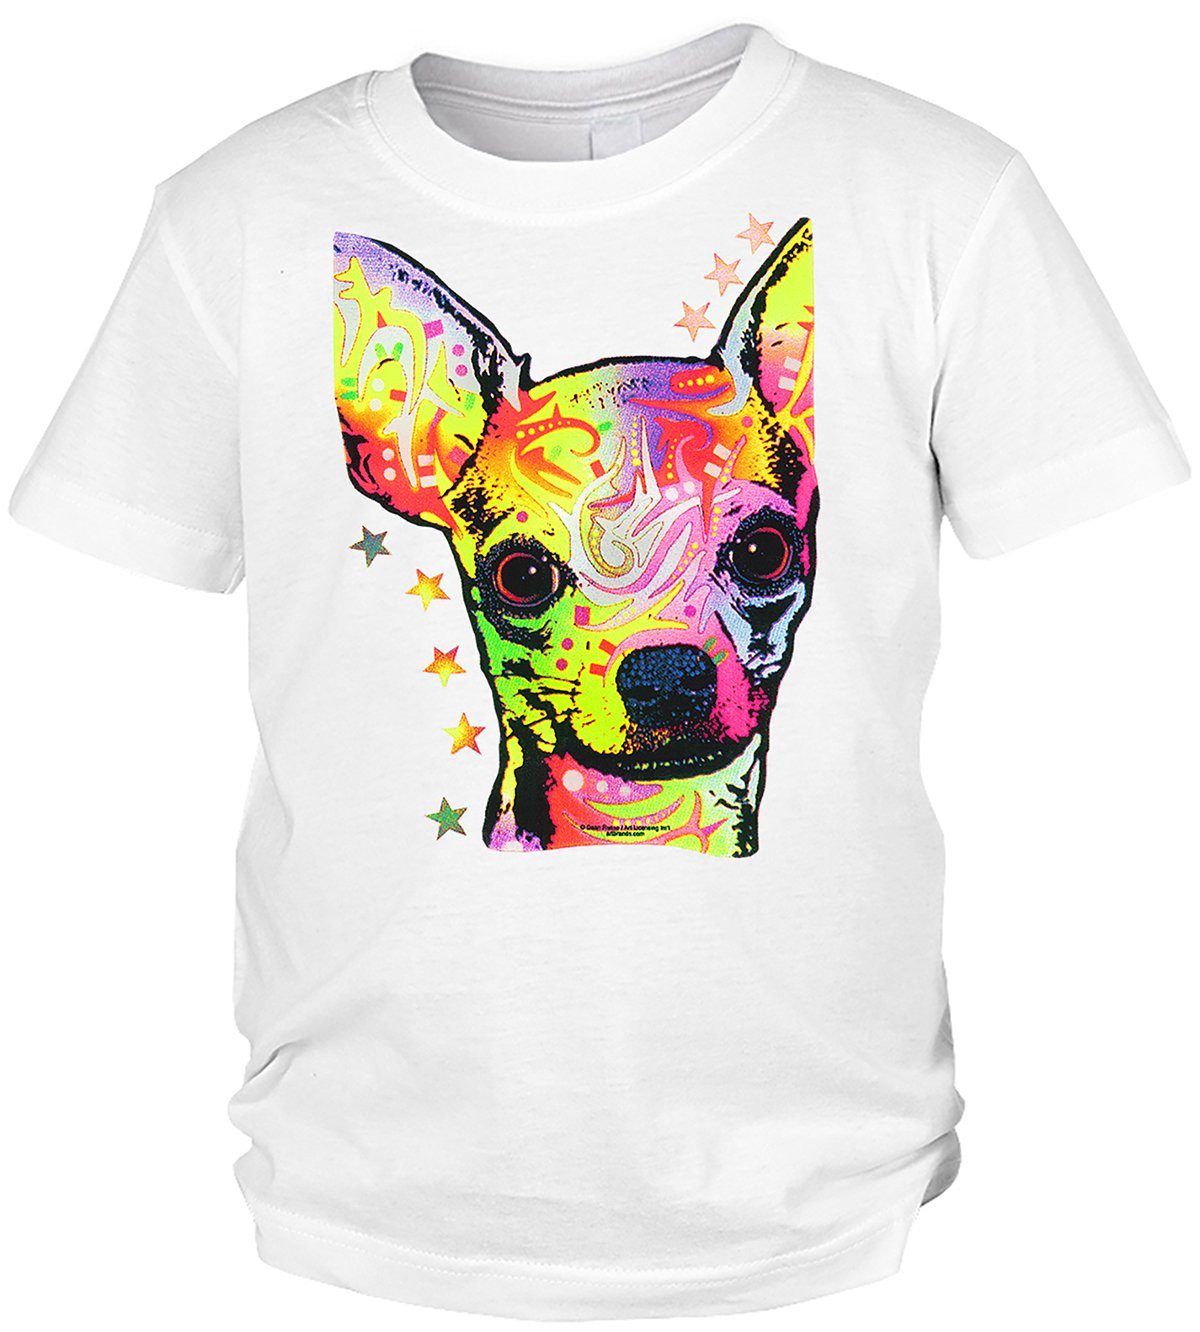 Kinder Shirts Tini - Shirts Print-Shirt Chihuahua Kinder Tshirt buntes Hundemotiv Kindershirt : Chihuahua